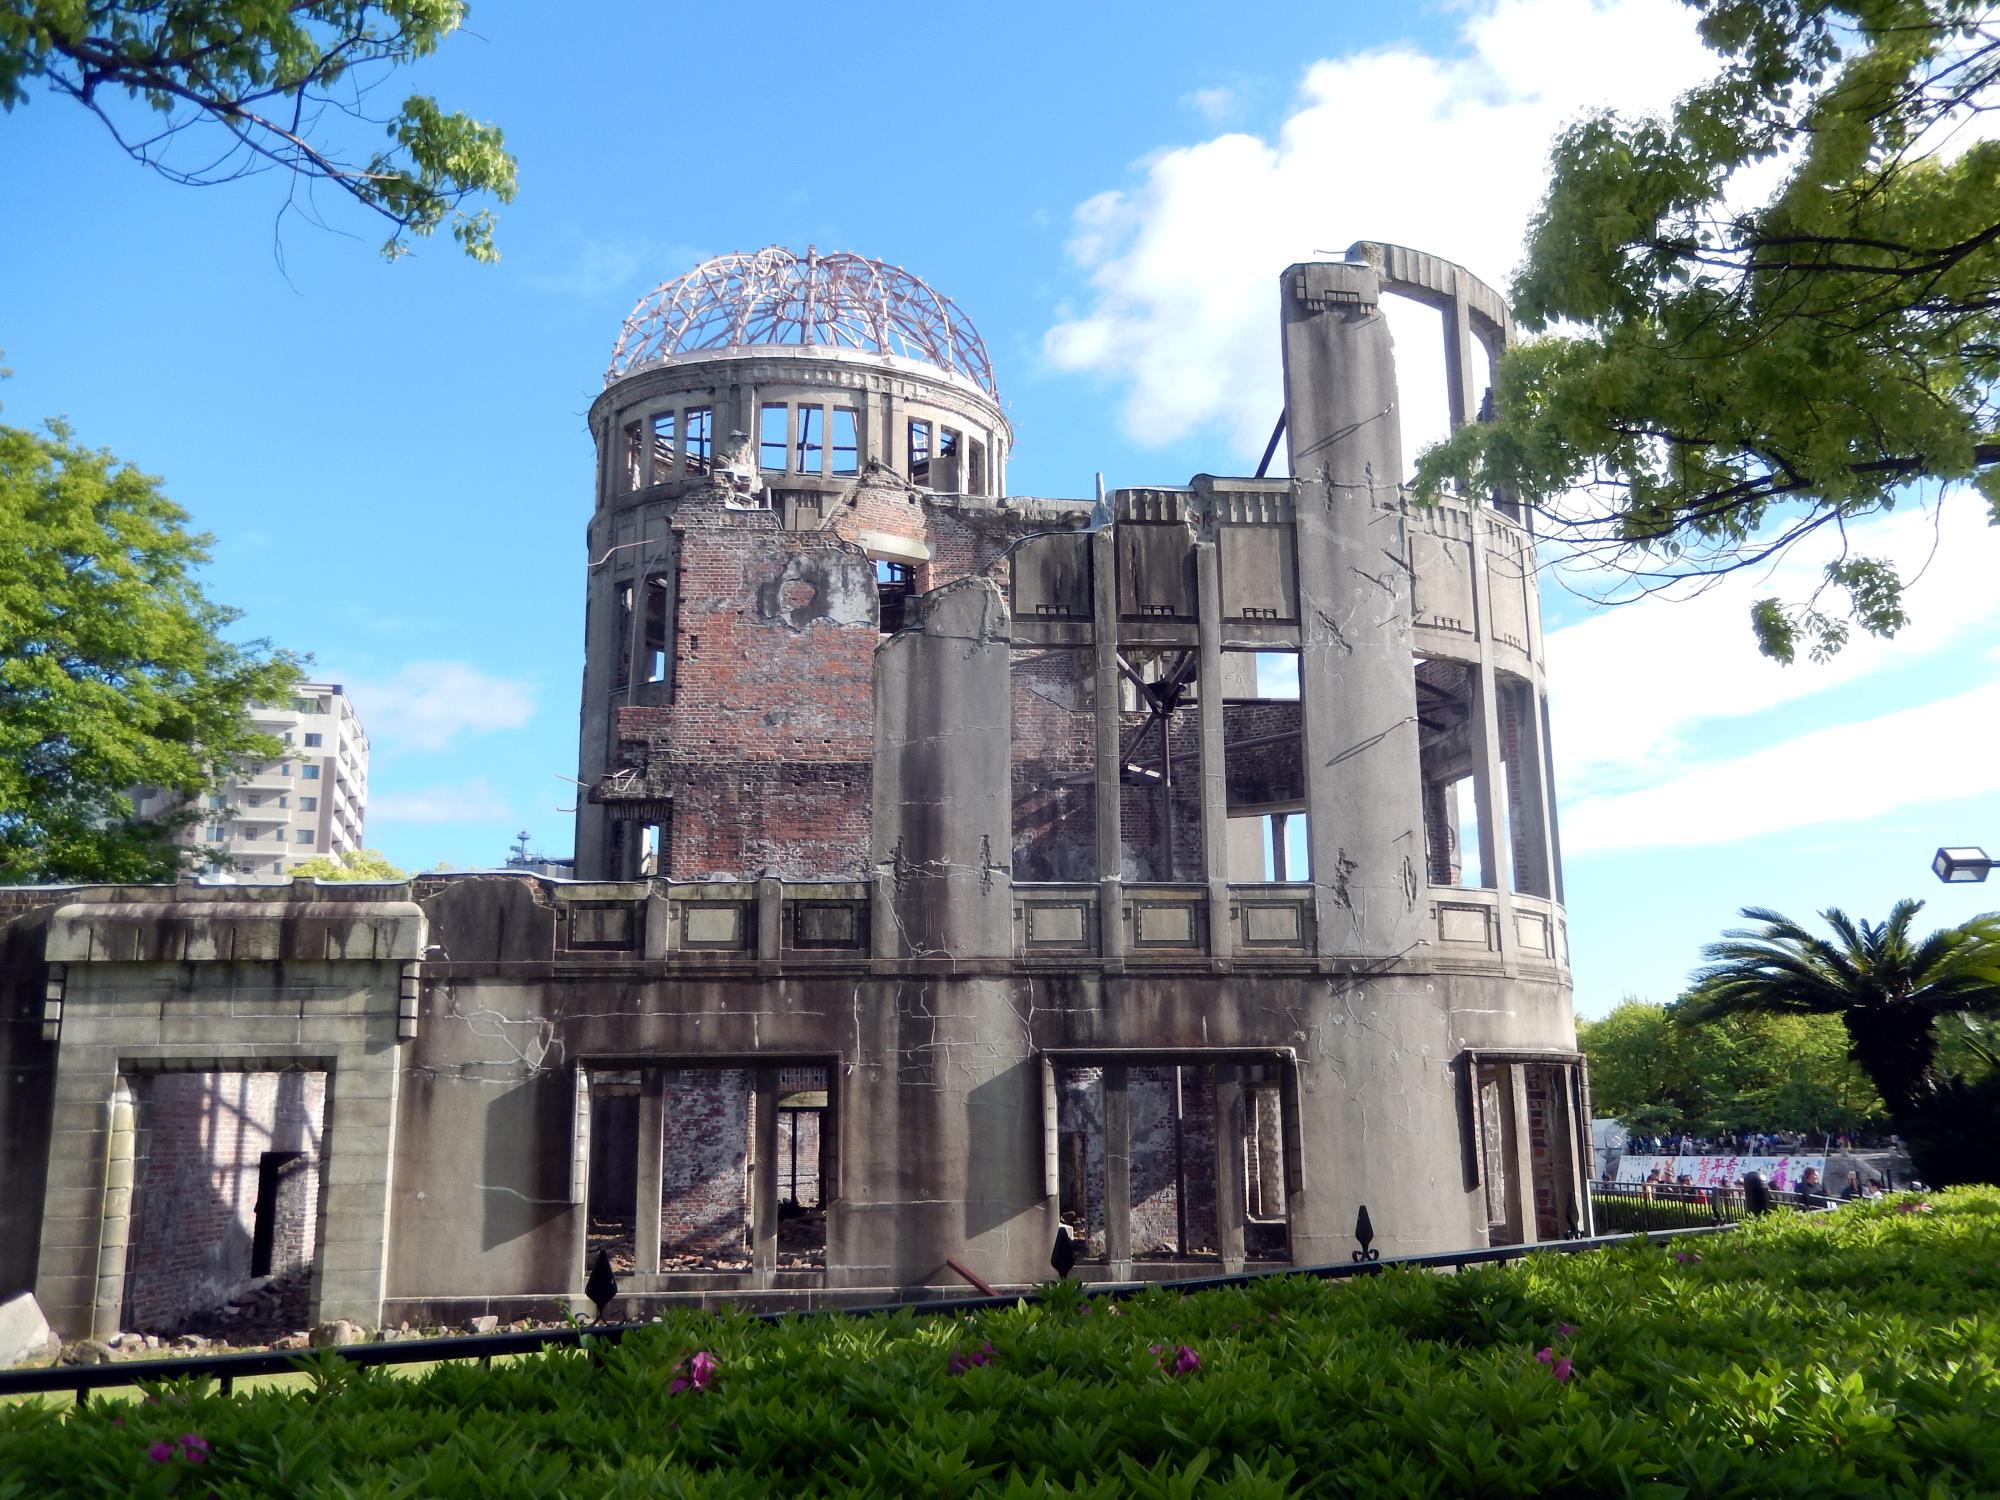 Japan (2017) - Atomic Bomb Dome #3